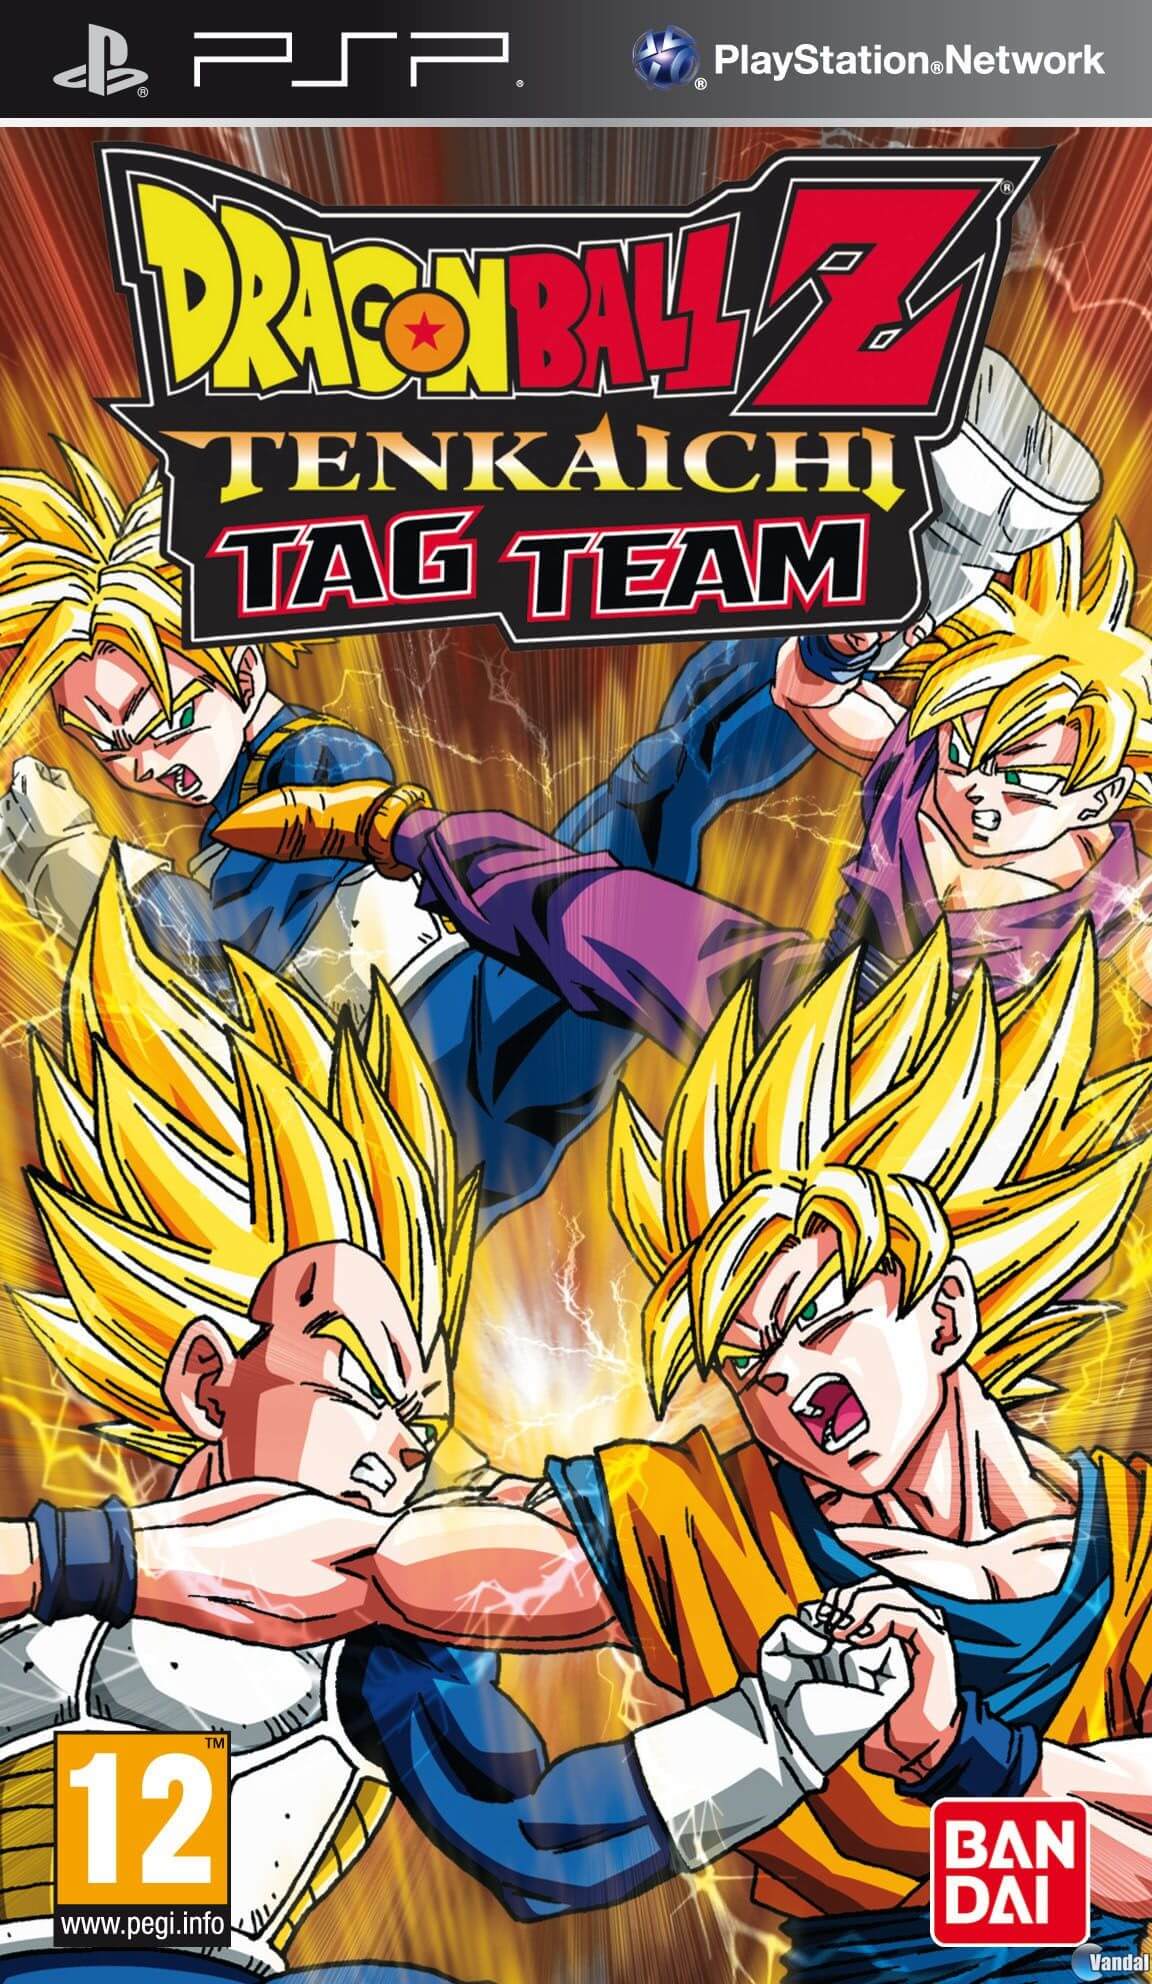 dragon ball z psp tenkaichi tag team